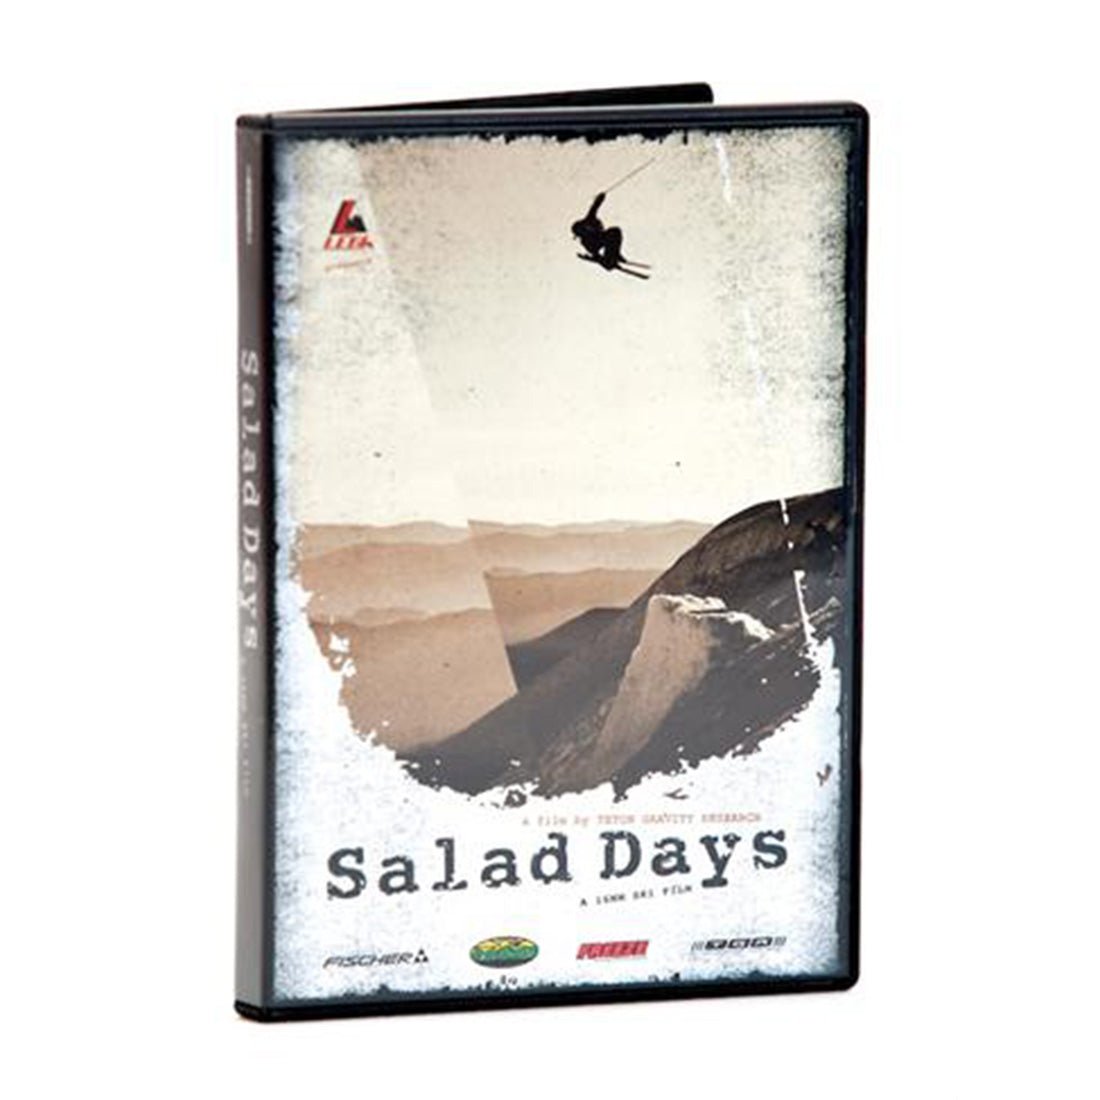 Salad Days - Teton Gravity Research